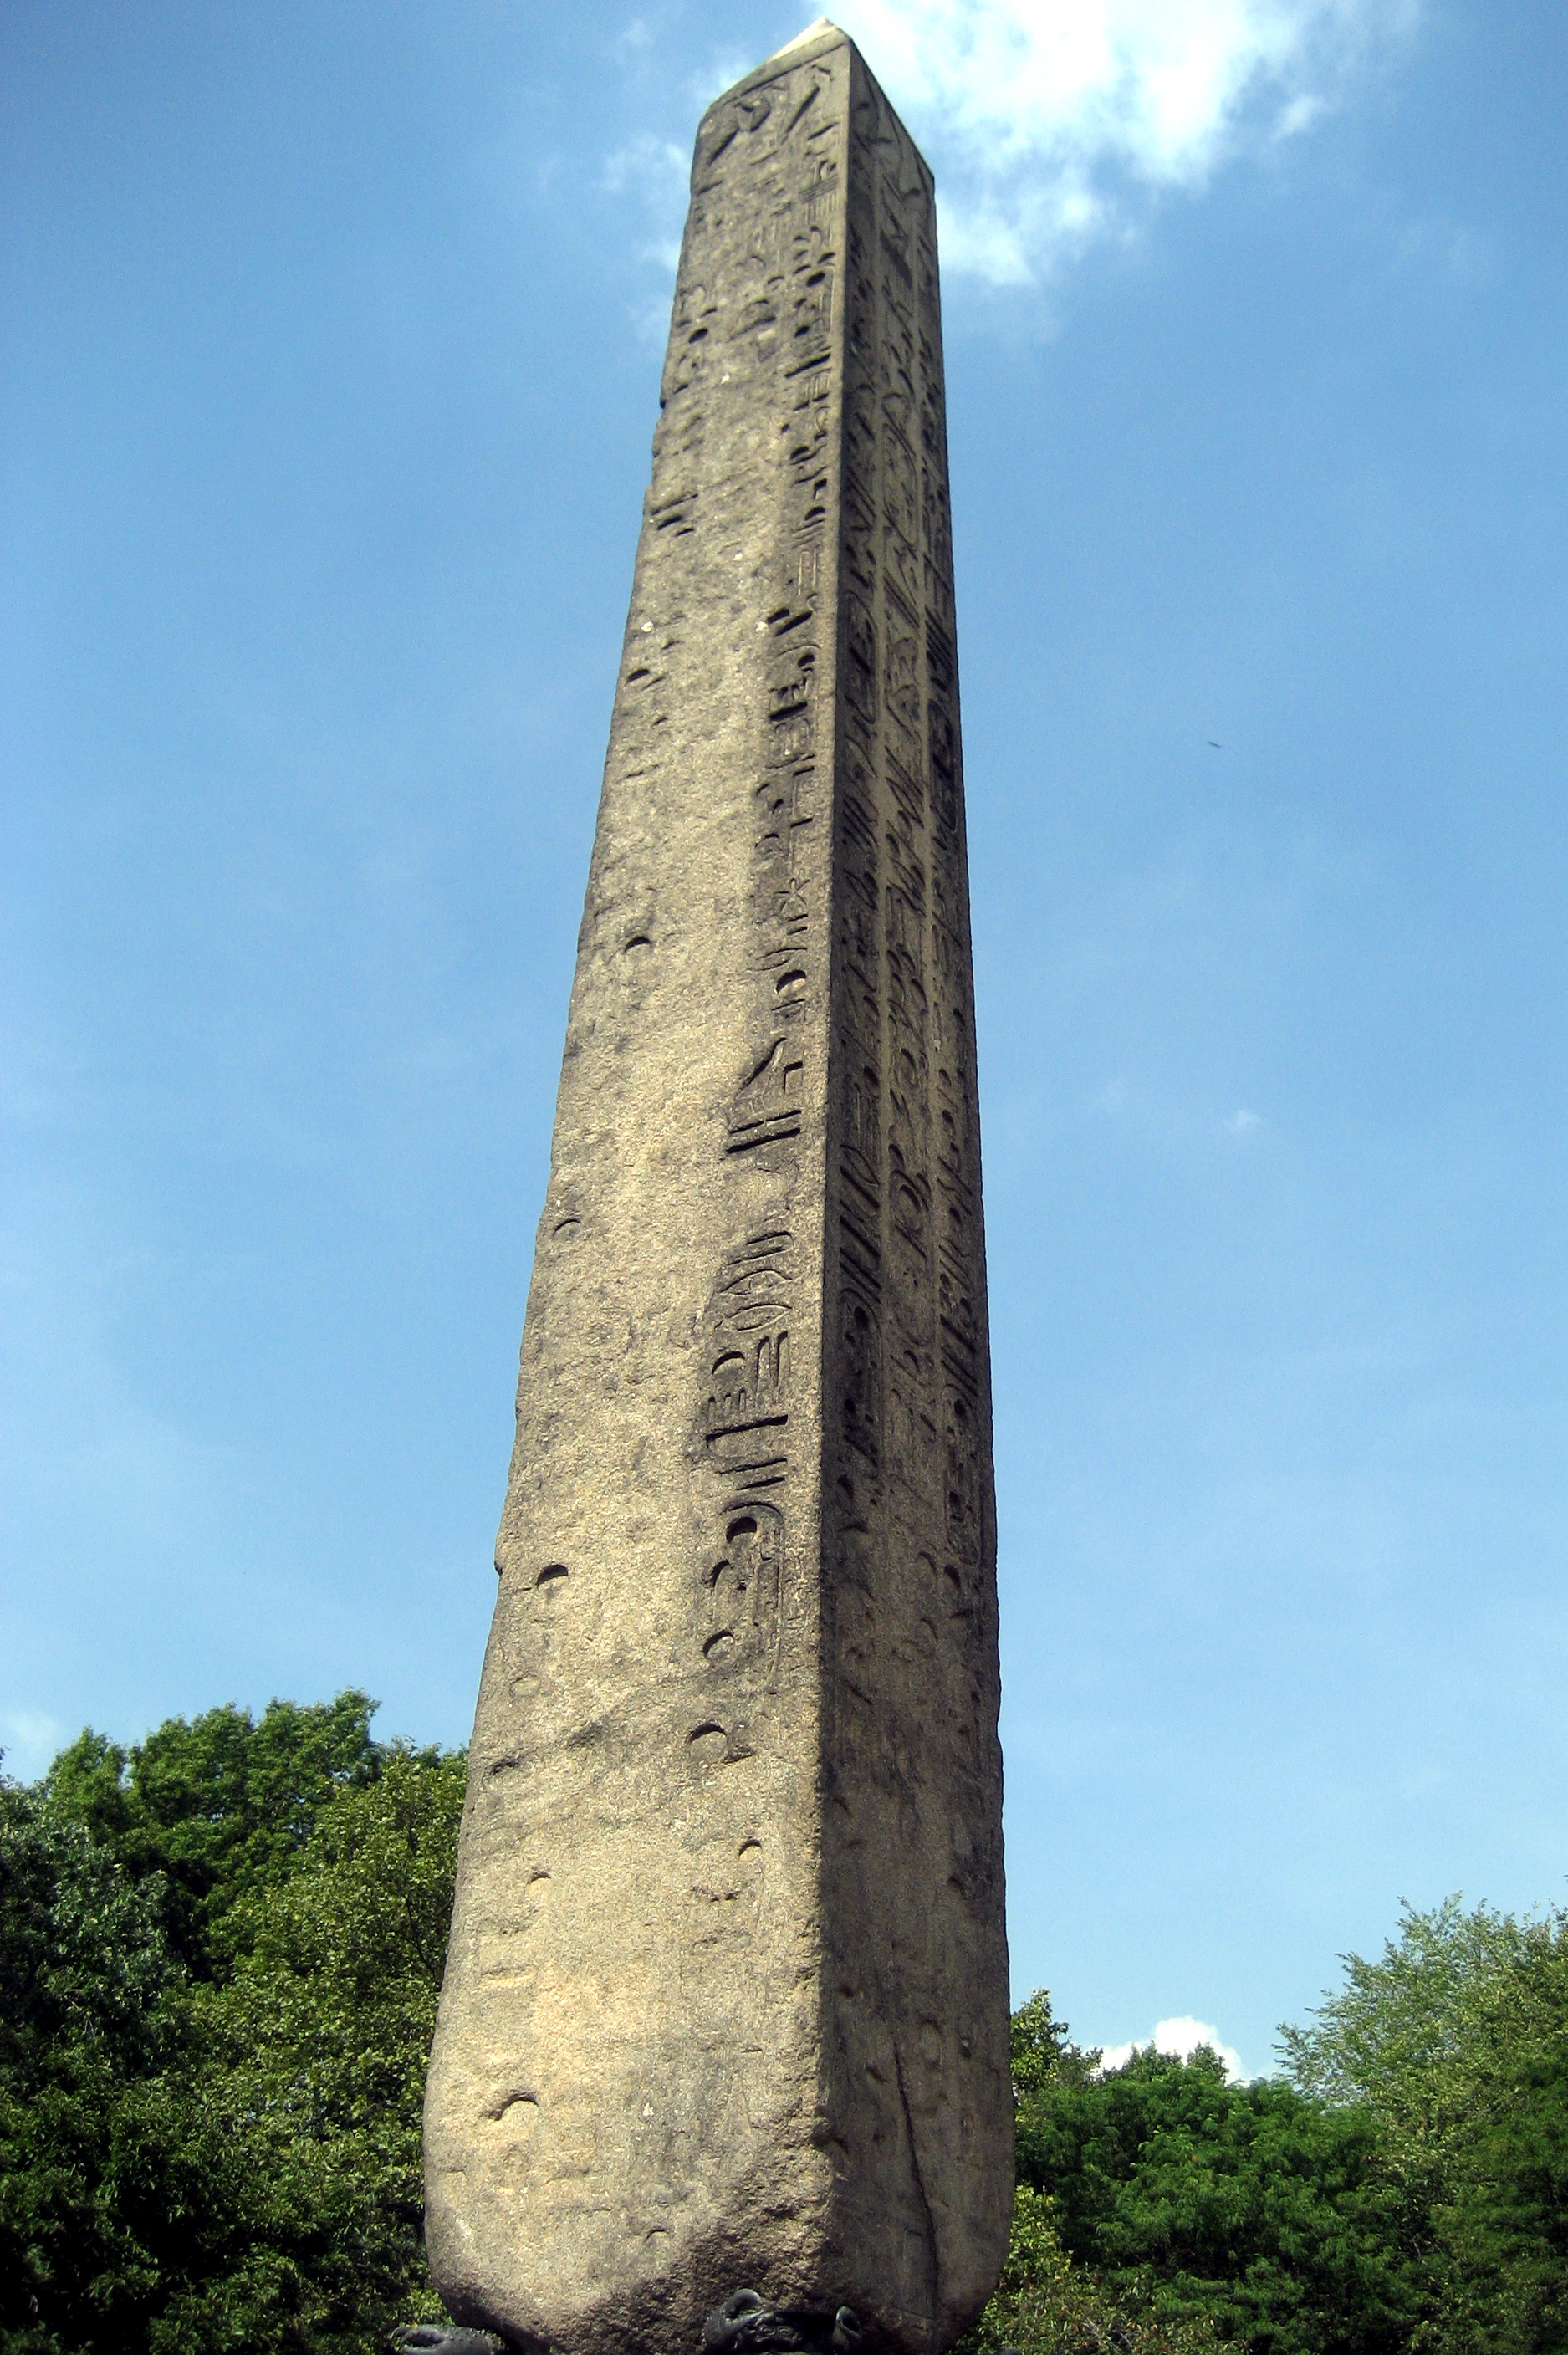 File:Obelisk central park nyc.jpg - Wikimedia Commons